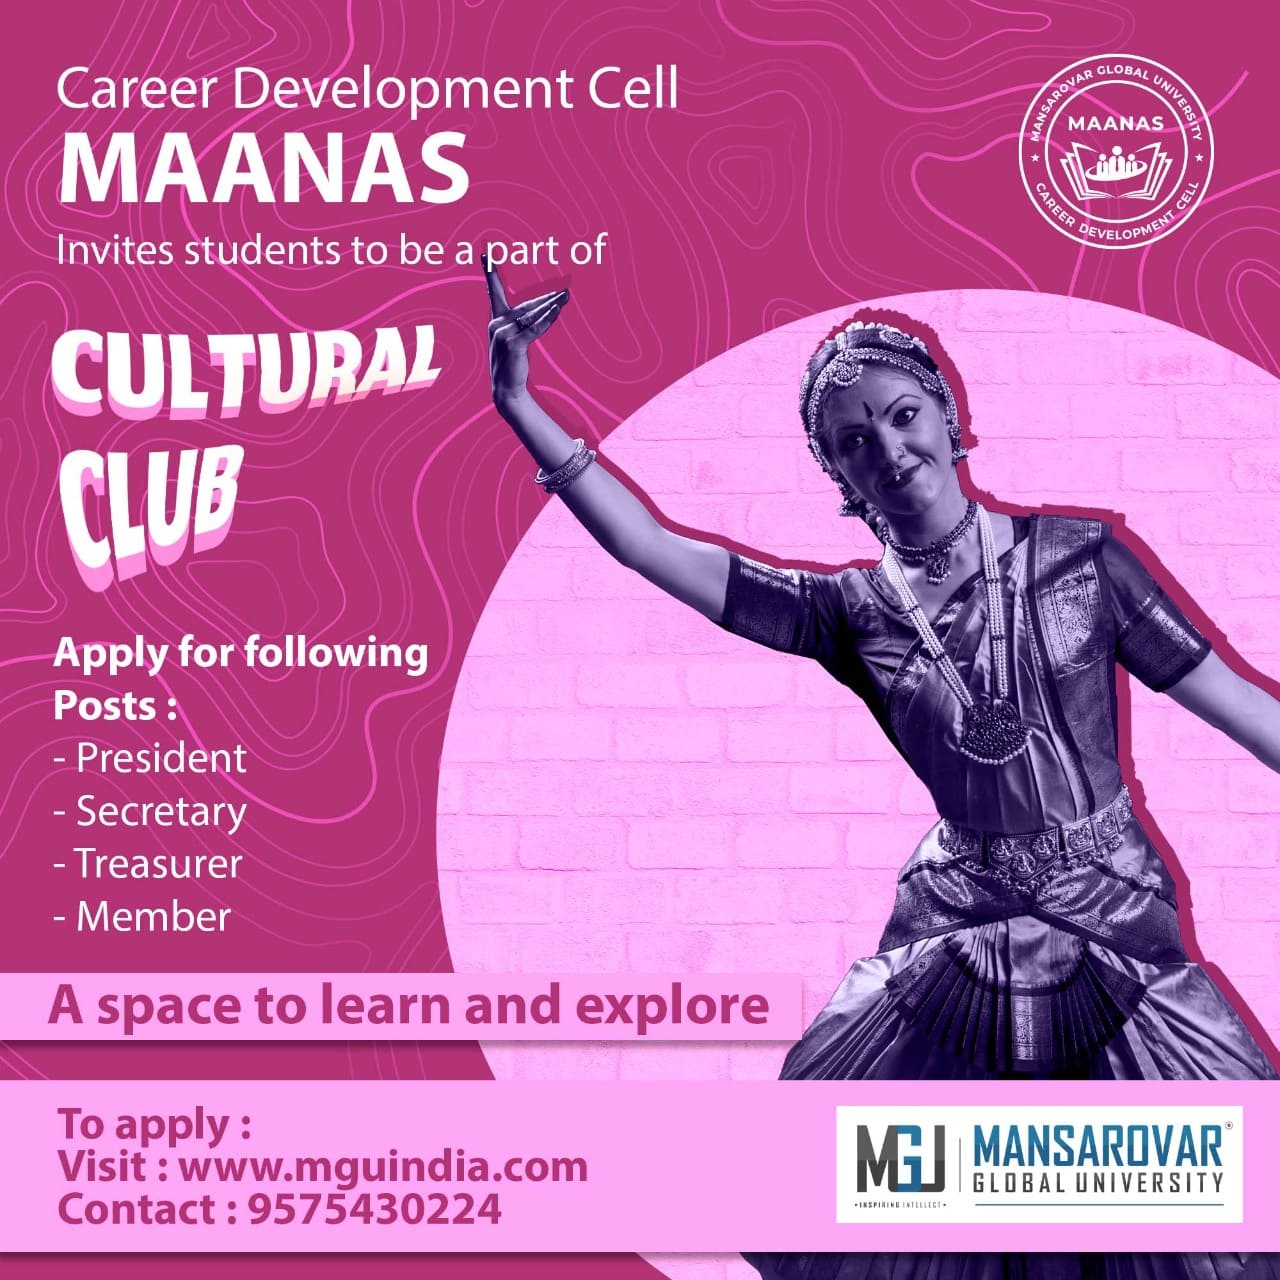 Mansarovar Global University